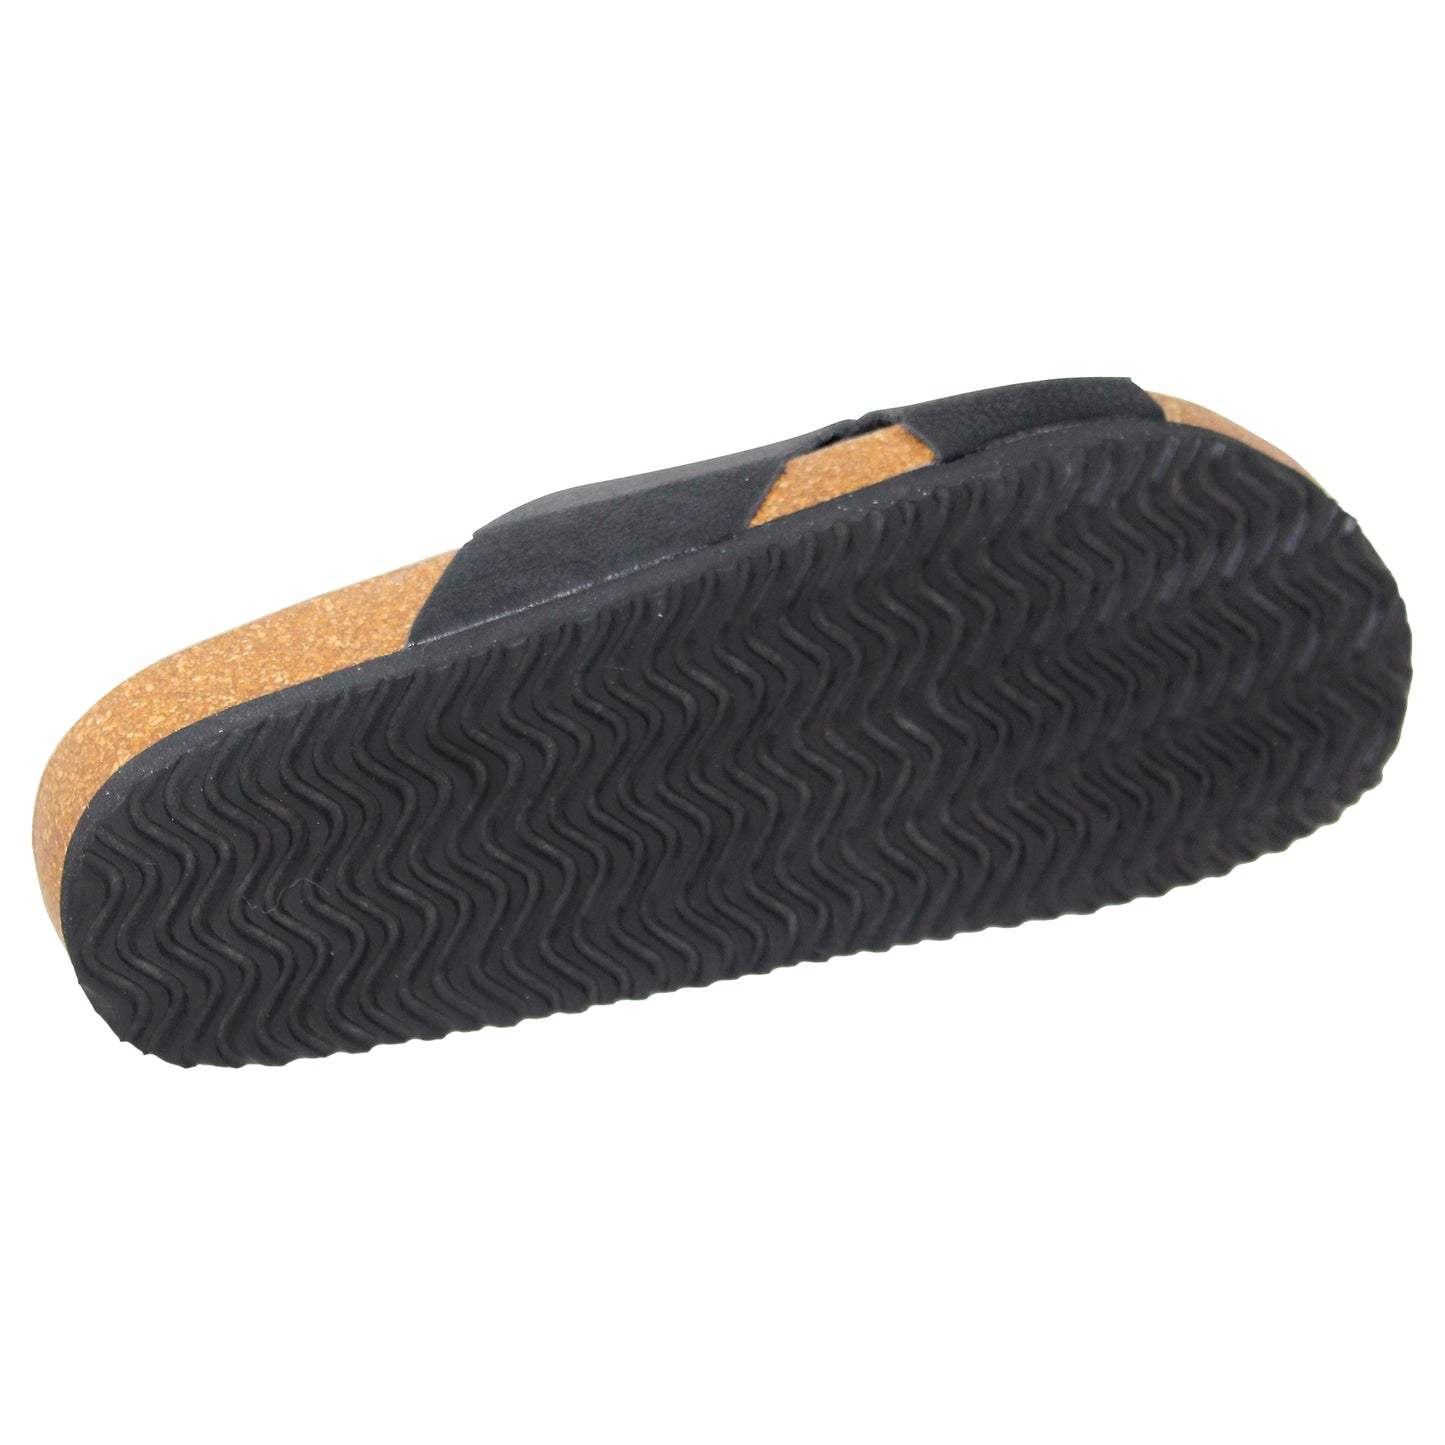 SOBEYO Classic Cork Sandals Criss-Cross Strap Slip On Black